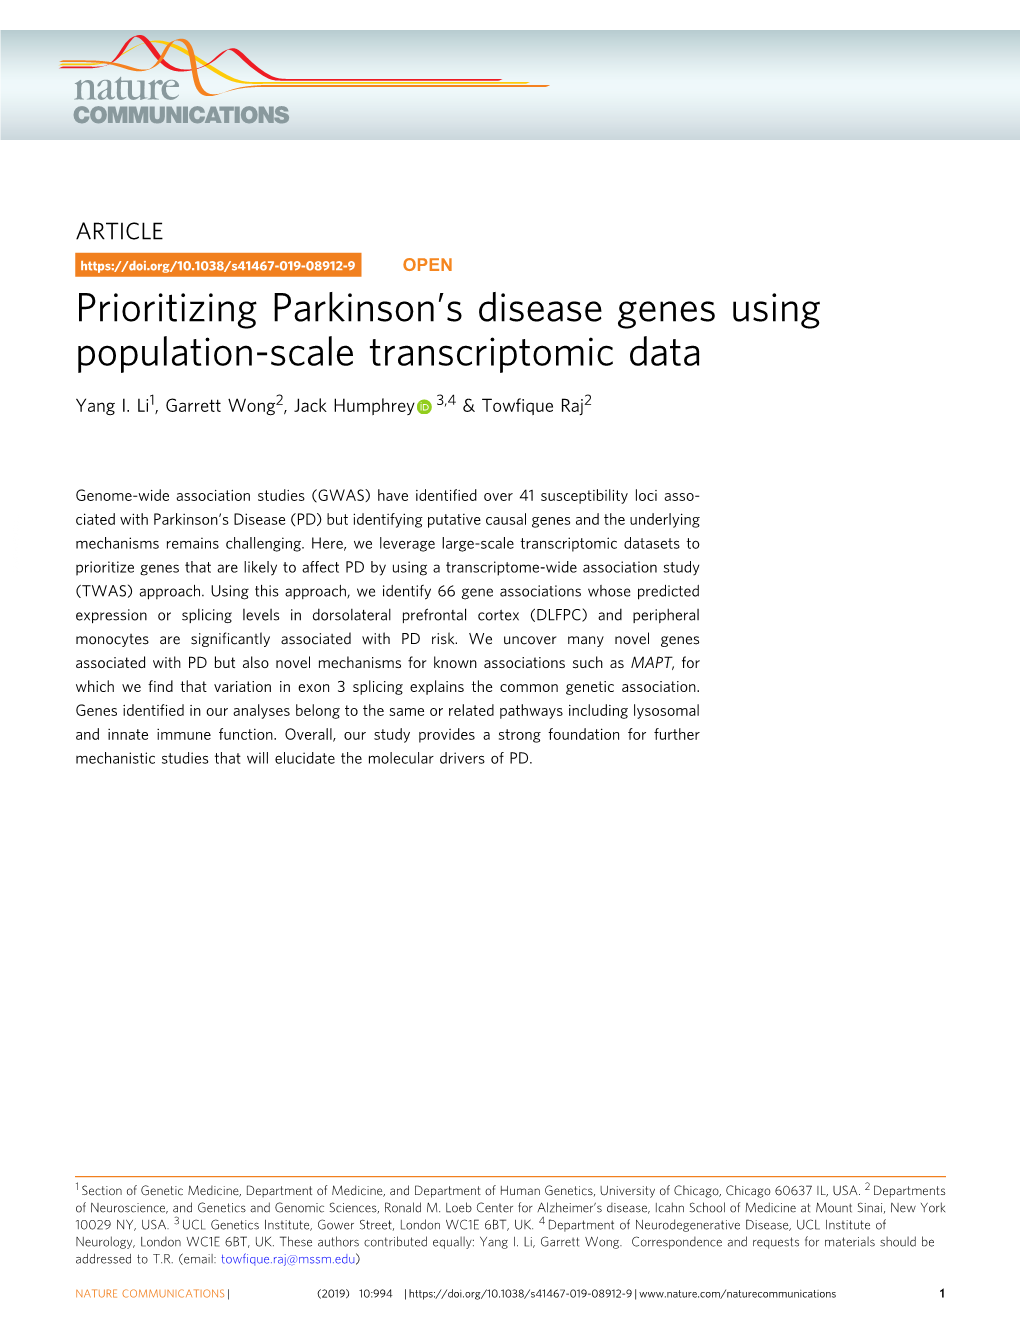 Prioritizing Parkinsonâ€™S Disease Genes Using Population-Scale